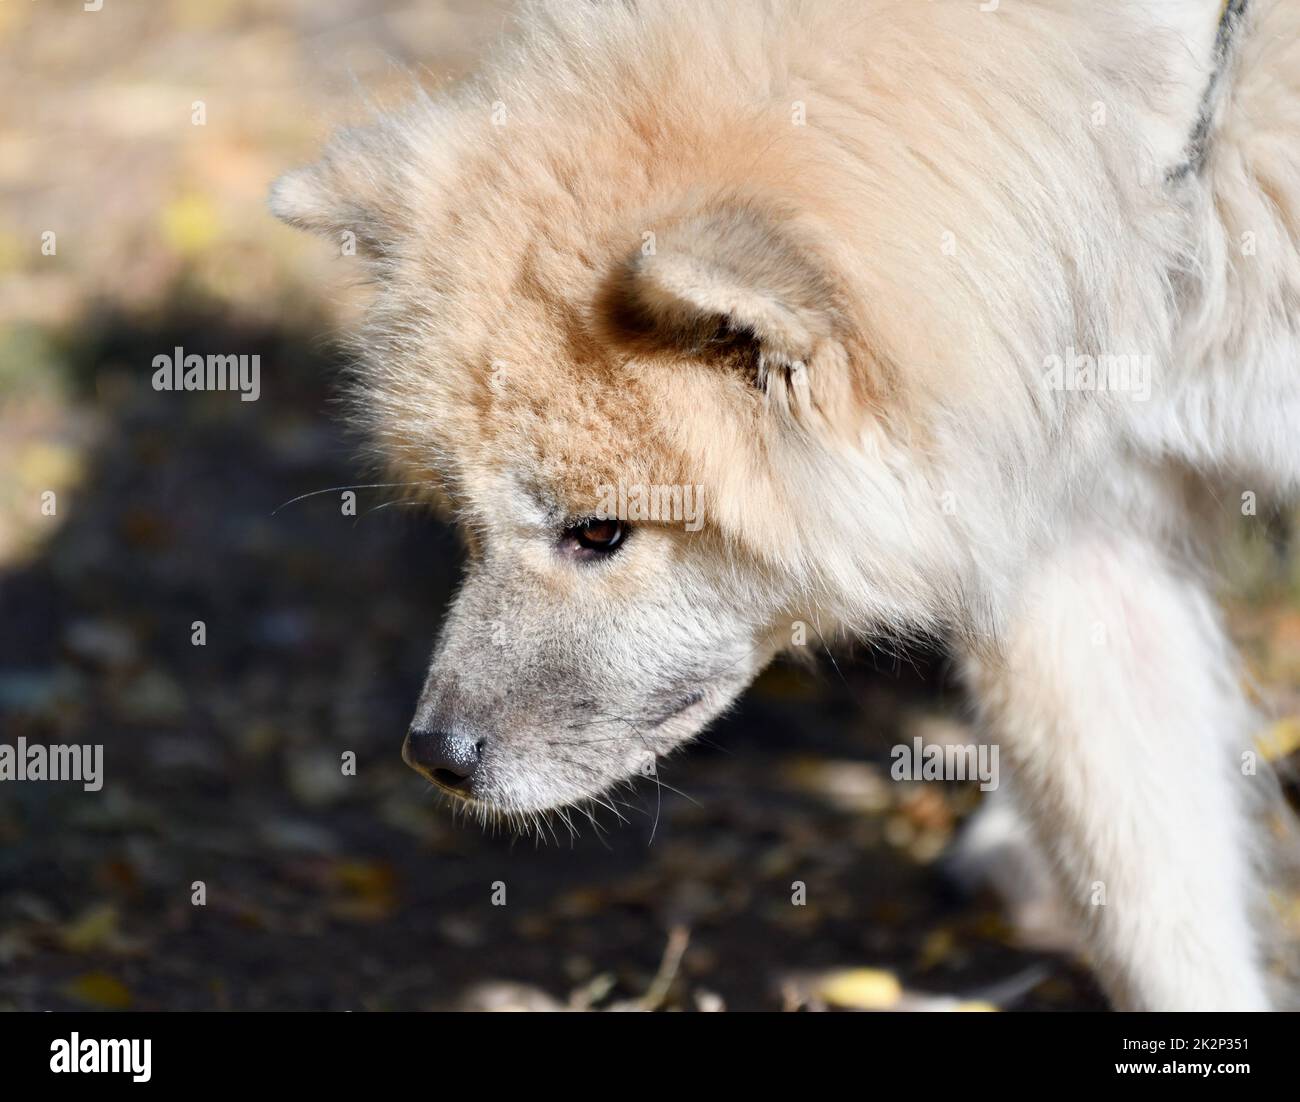 Langhaariger Akita Inu oder japanischer Akita-Hund Stockfoto